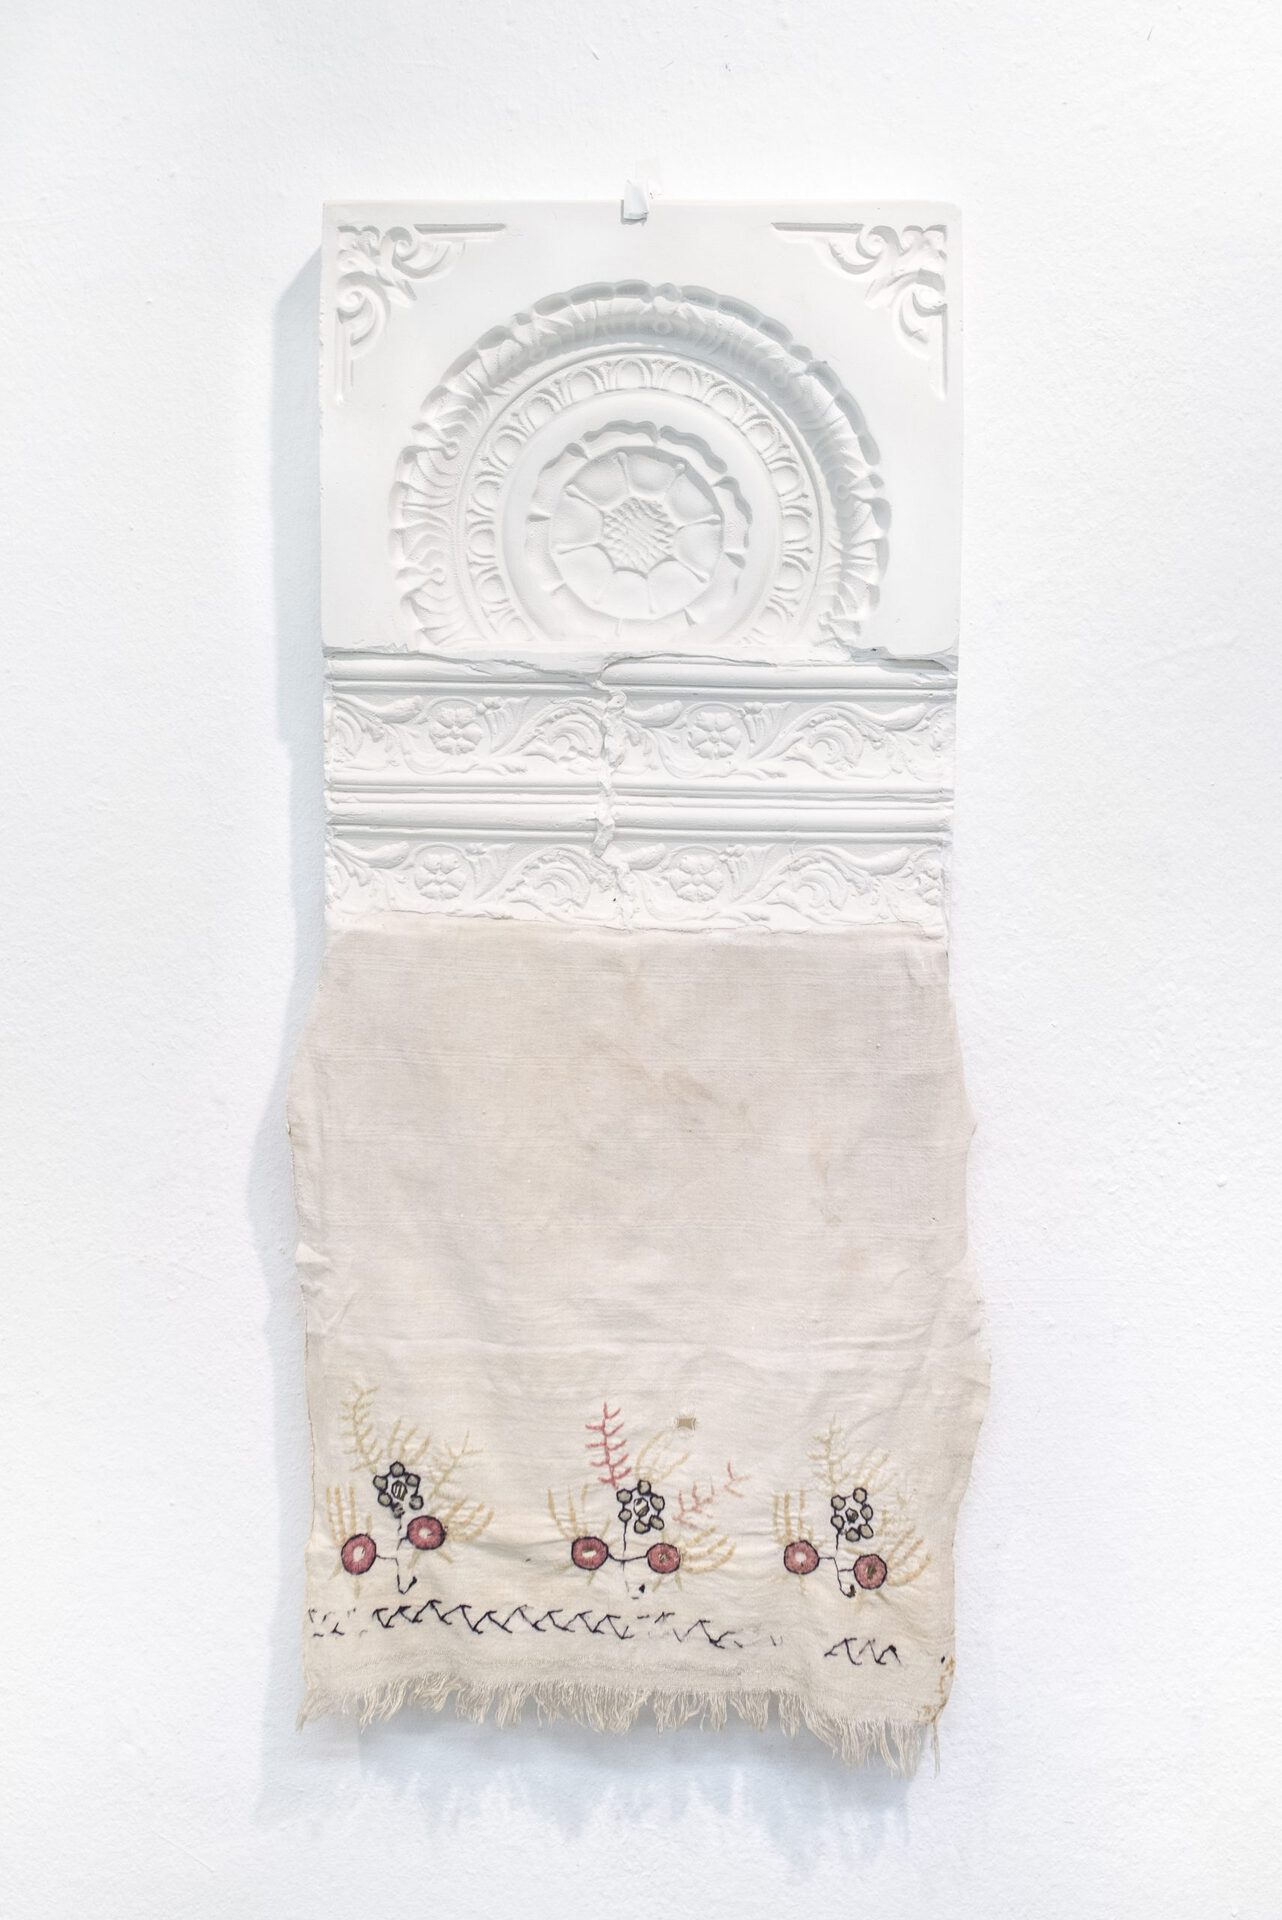 Ekin Su Koç, Altbau XVI, 2020, Lace, Fabric and Plaster, 35 x 50 x 4 cm